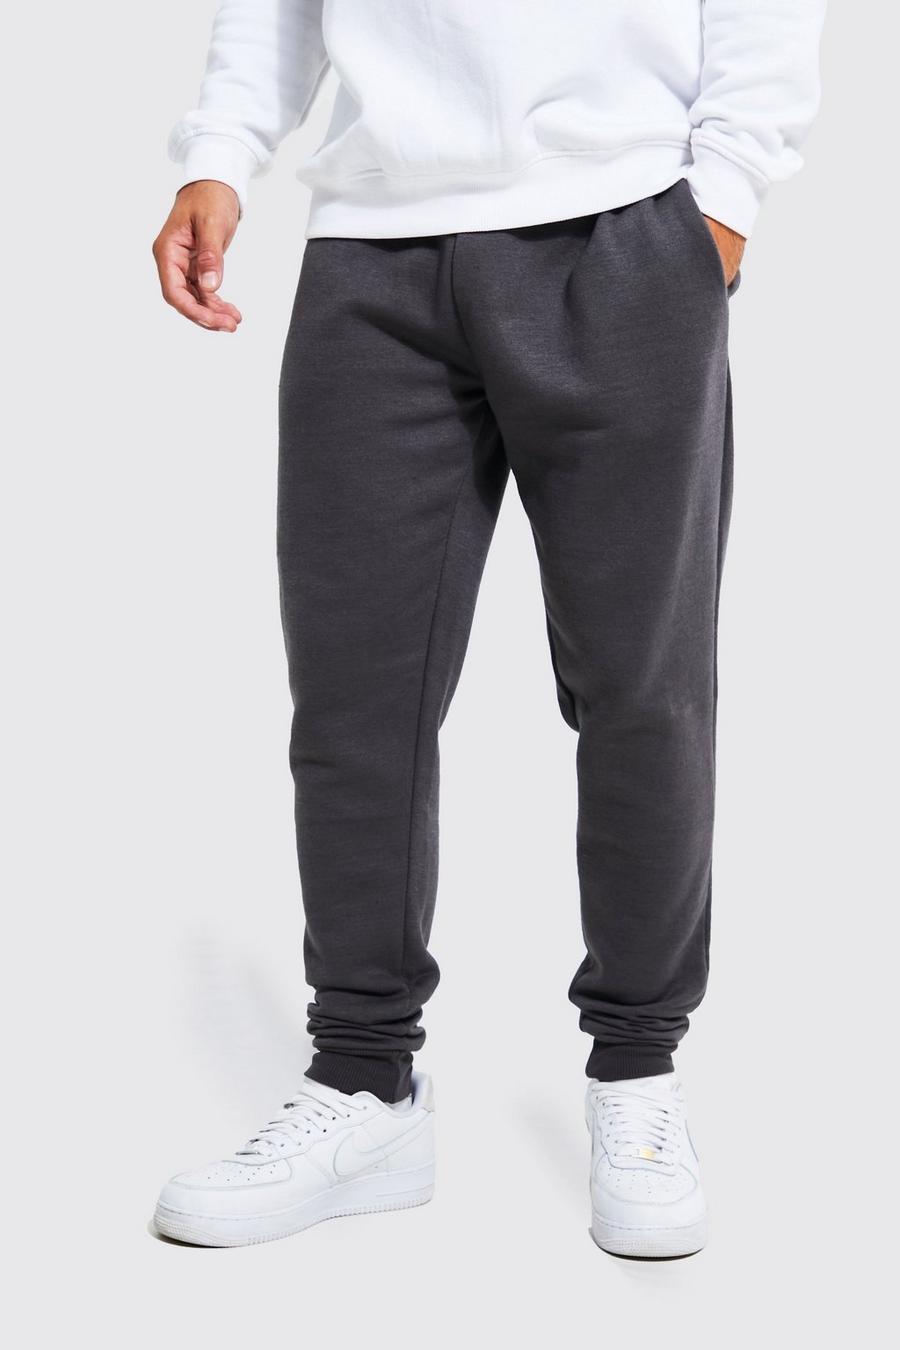 Pantaloni tuta Basic Skinny Fit, Dark grey gris